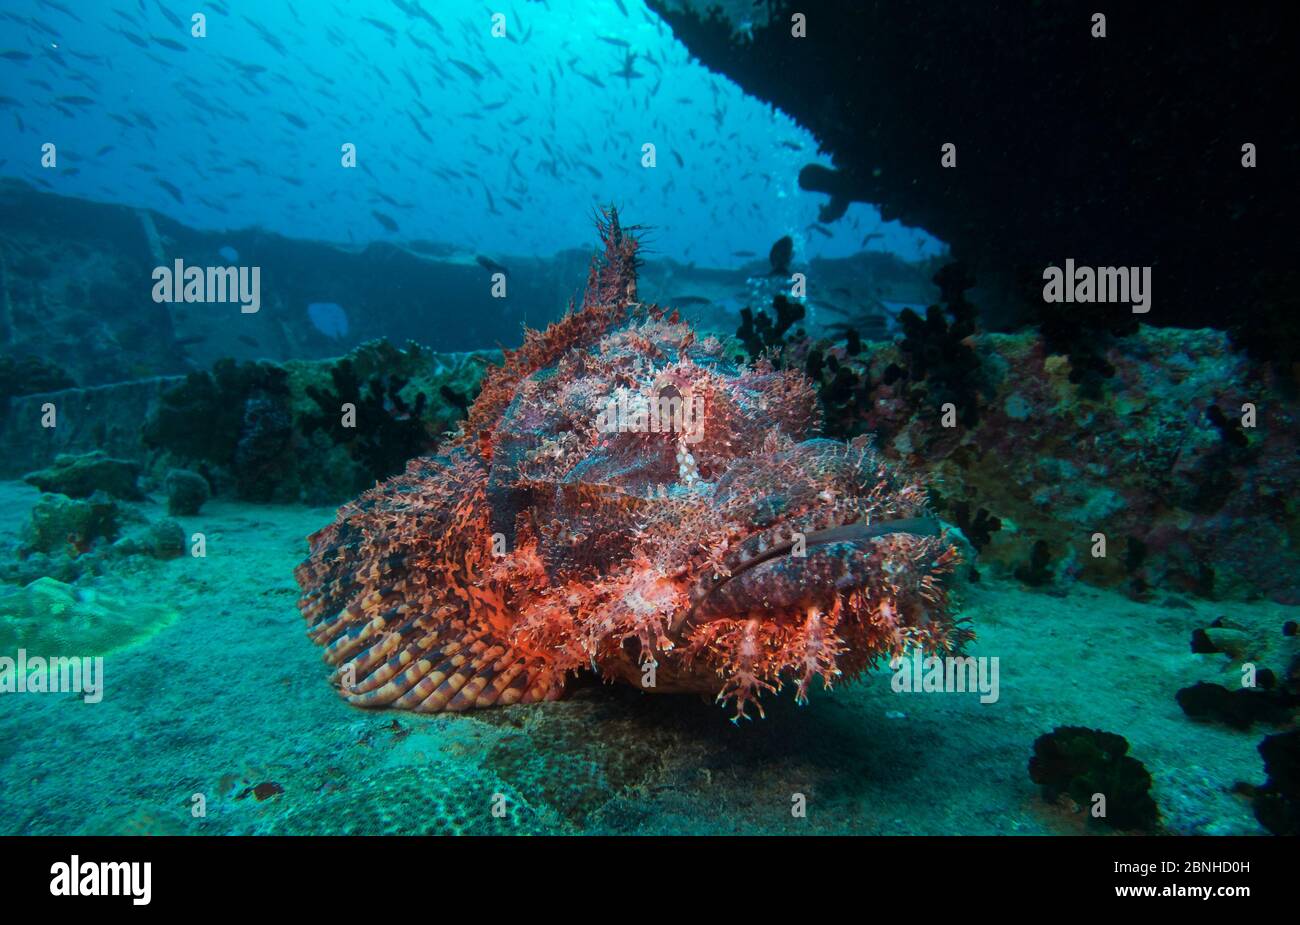 Tasseled scorpionfish (Scorpaenopsis oxycephala) on the wreck of the SS Thirstlegorm, northern Red Sea, December 2014 Stock Photo